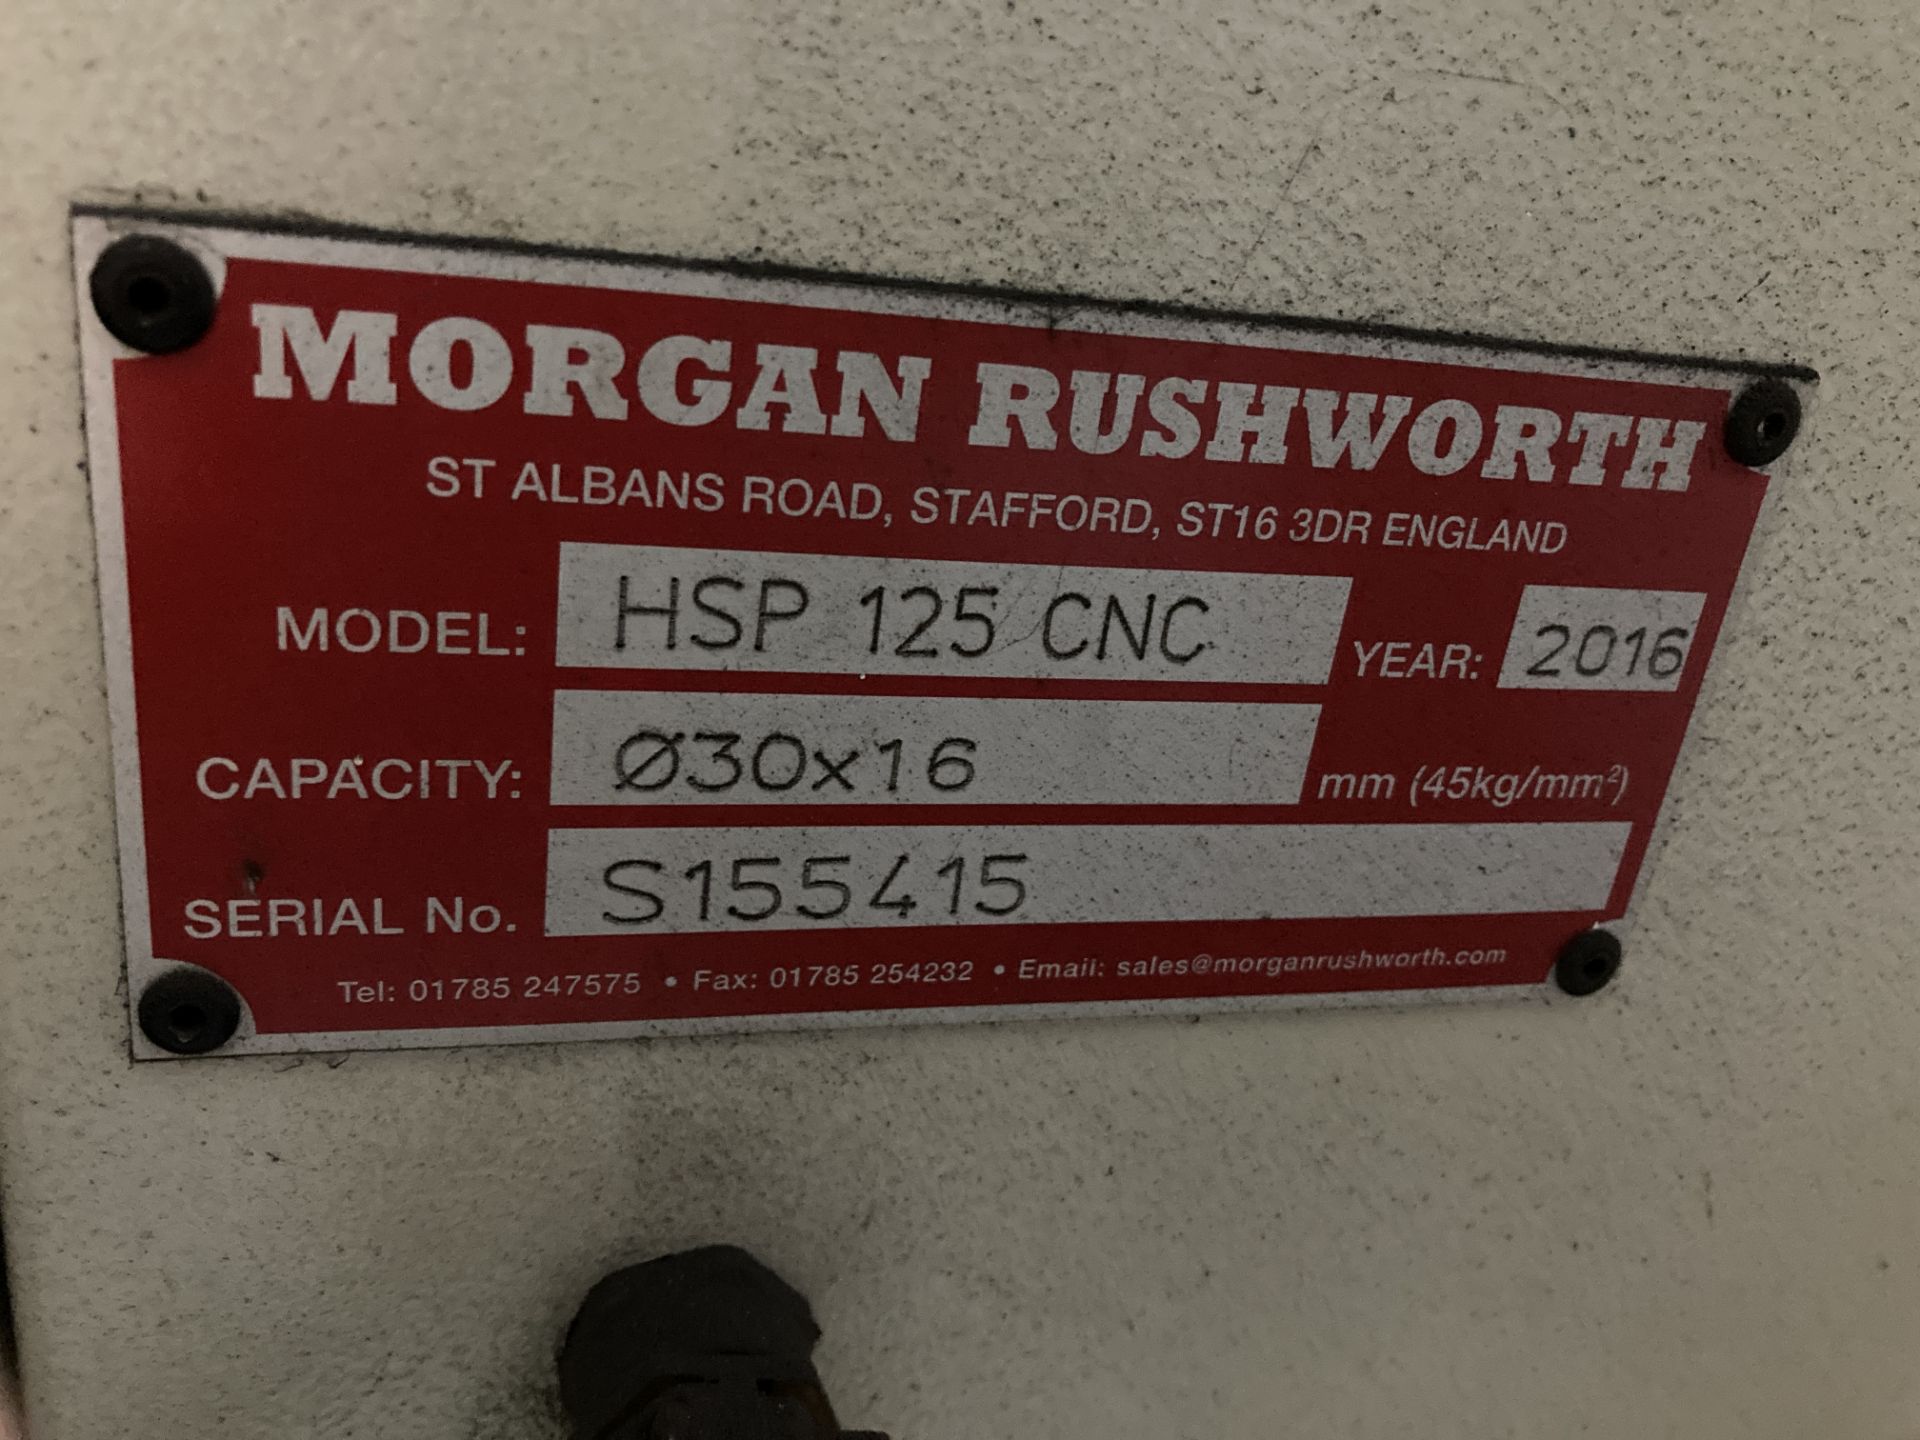 Morgan Rushworth HSP 125 CNC triple head hydraulic punching machine, year 2016, serial no. S155415 - Image 8 of 12